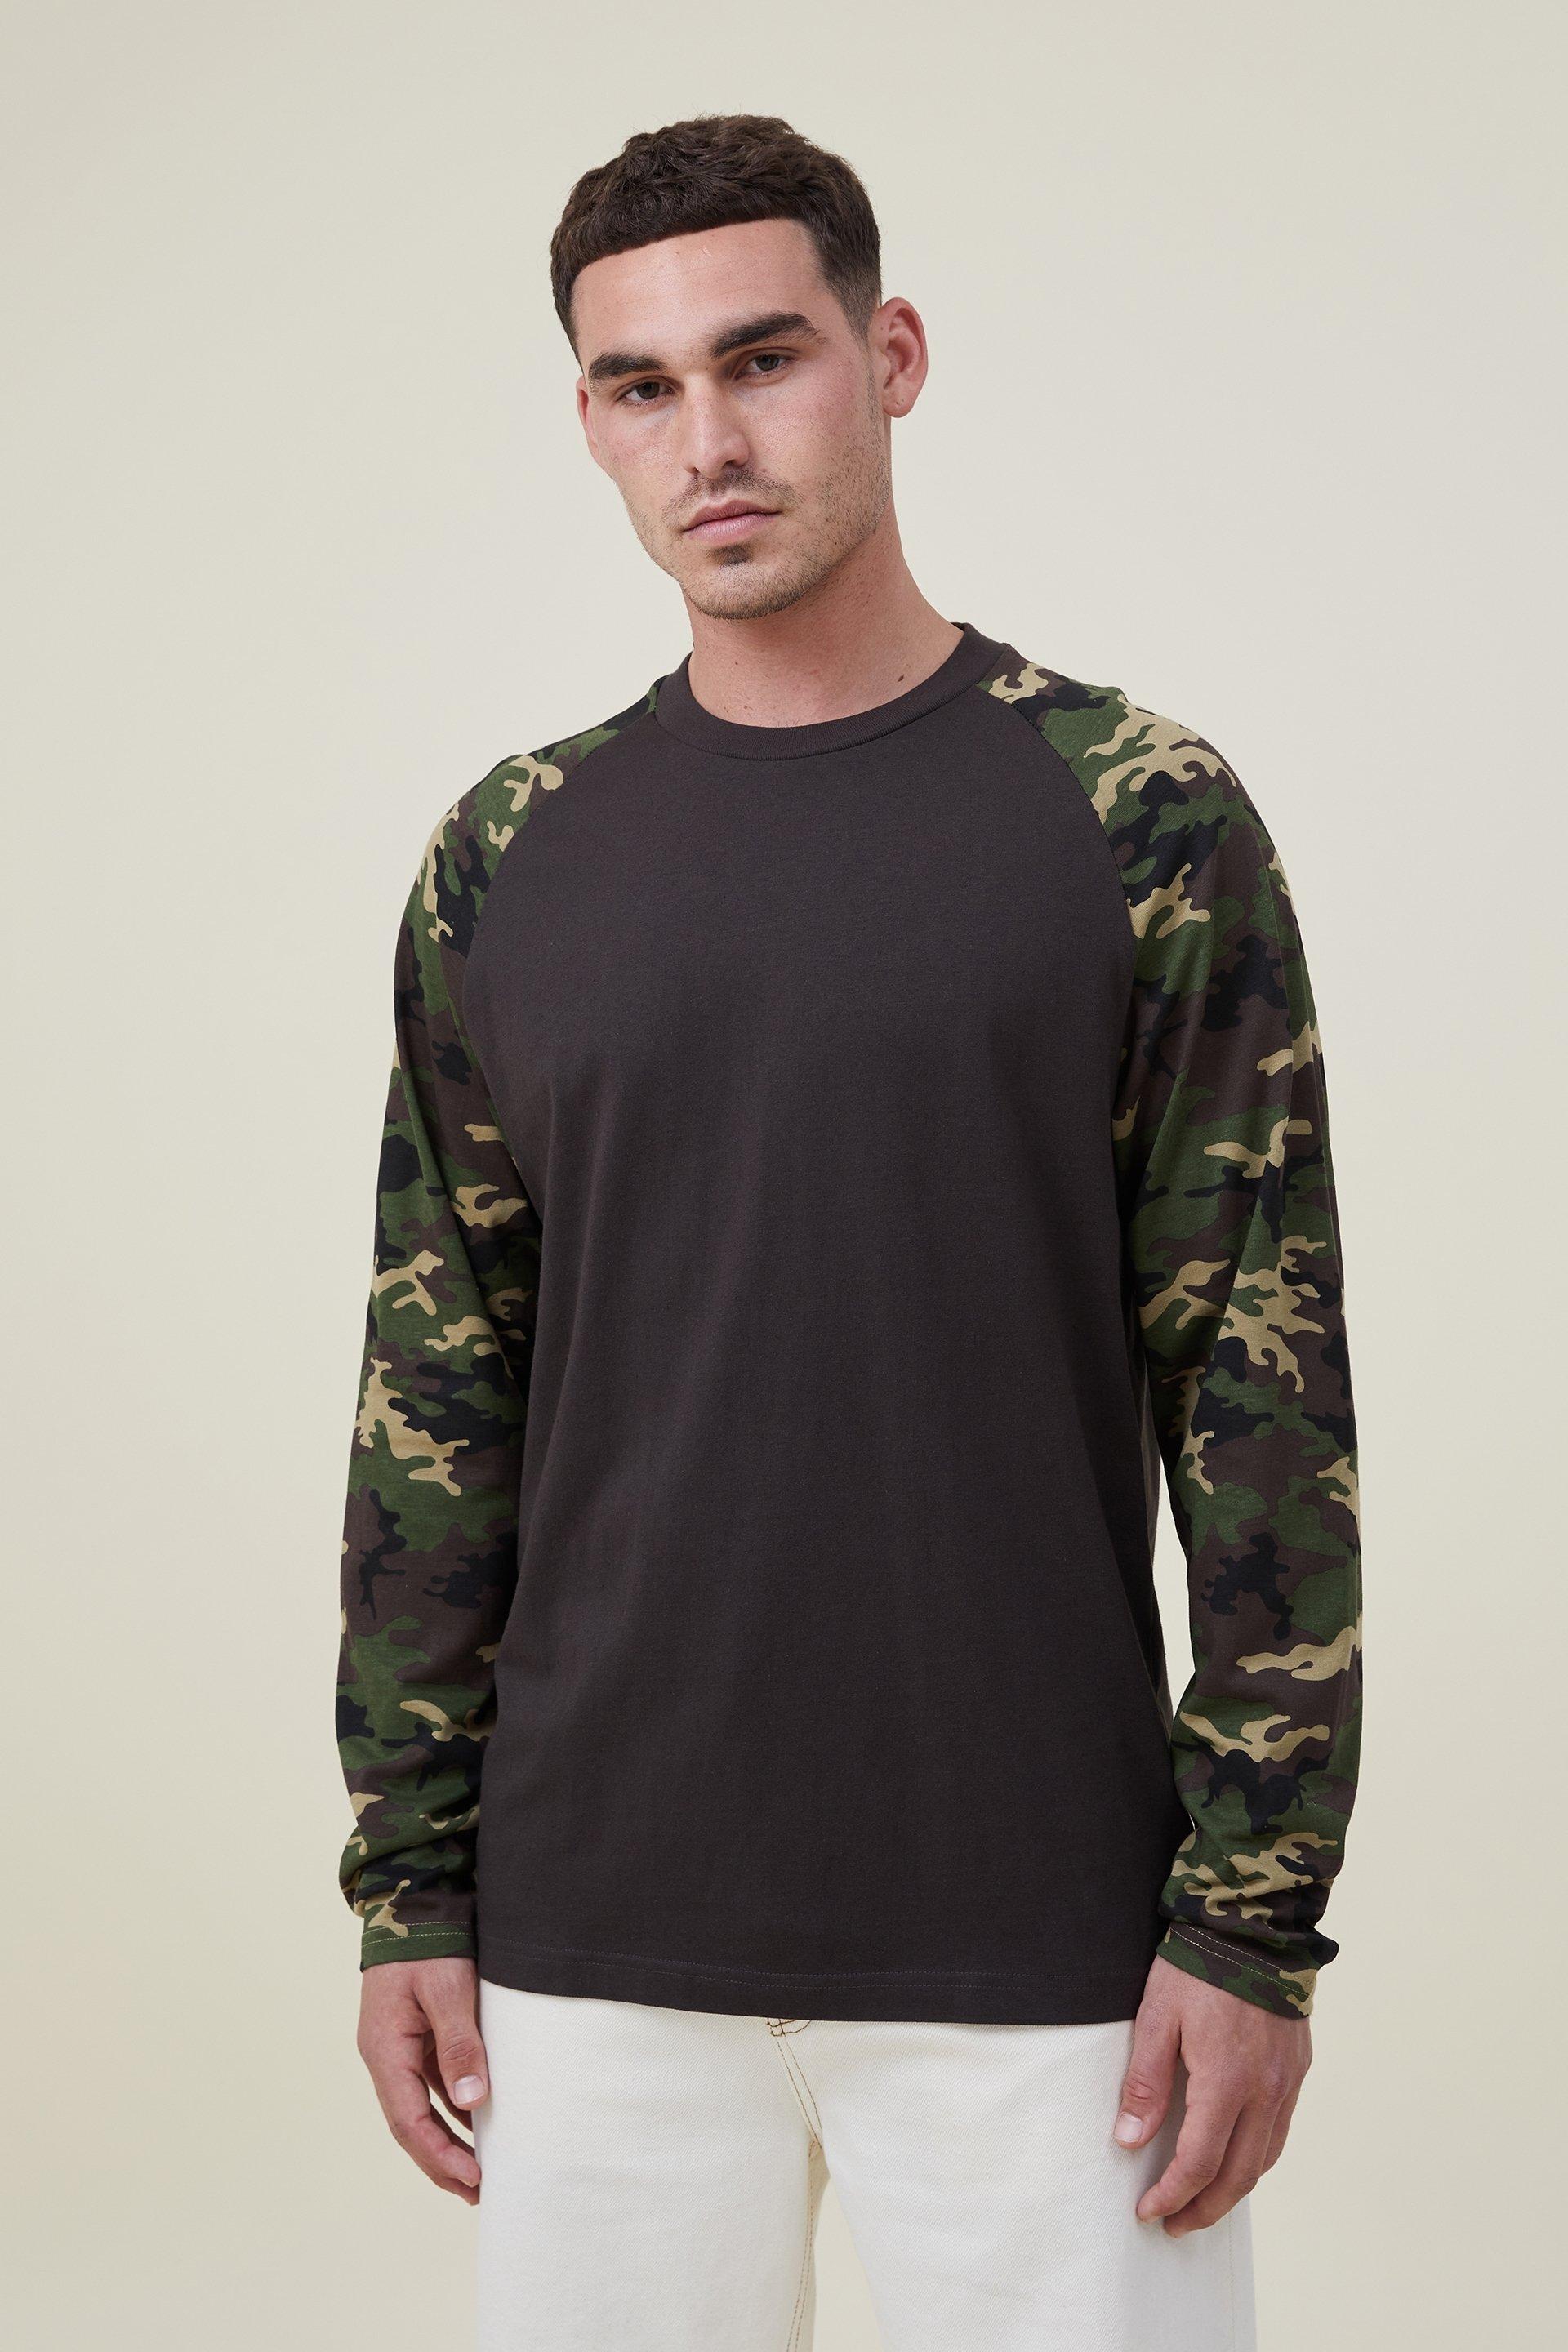 Raglan long sleeve T-Shirt - black/camo Cotton On Shirts | Superbalist.com